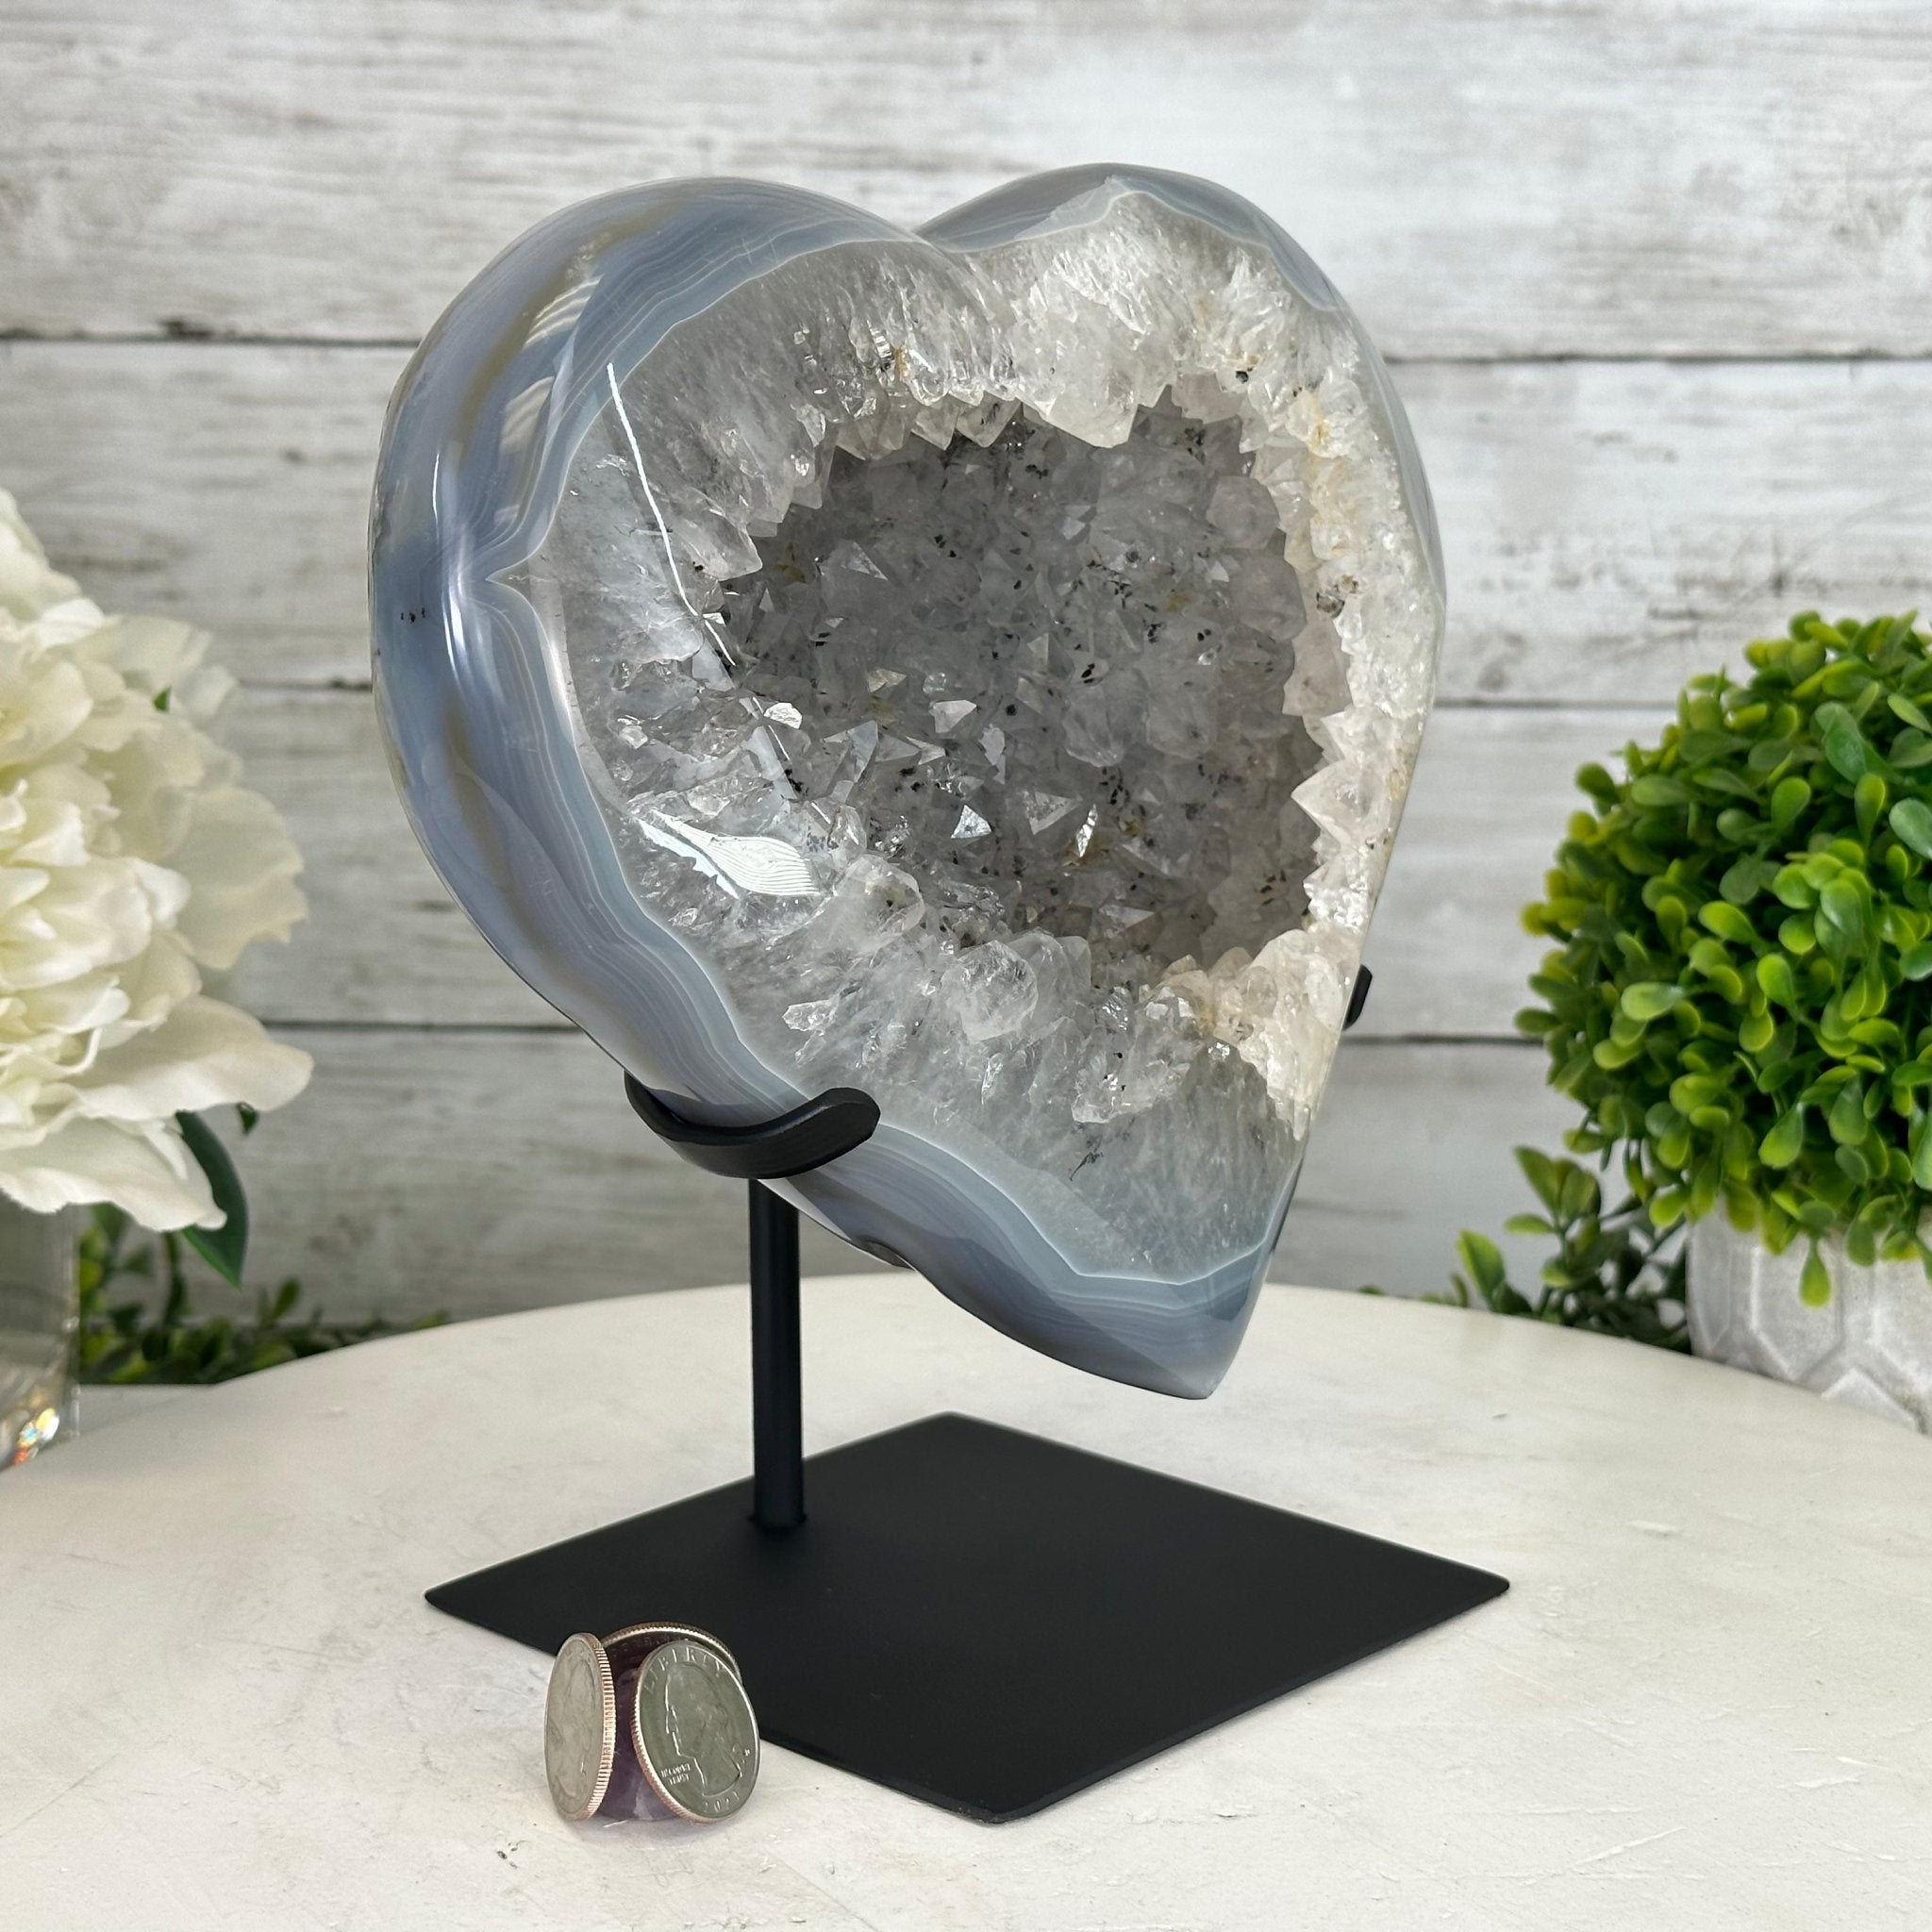 Polished Agate Heart Geode on a Metal Stand, 7.8 lbs & 8.5" Tall, Model #5468-0084 by Brazil Gems - Brazil GemsBrazil GemsPolished Agate Heart Geode on a Metal Stand, 7.8 lbs & 8.5" Tall, Model #5468-0084 by Brazil GemsHearts5468-0084